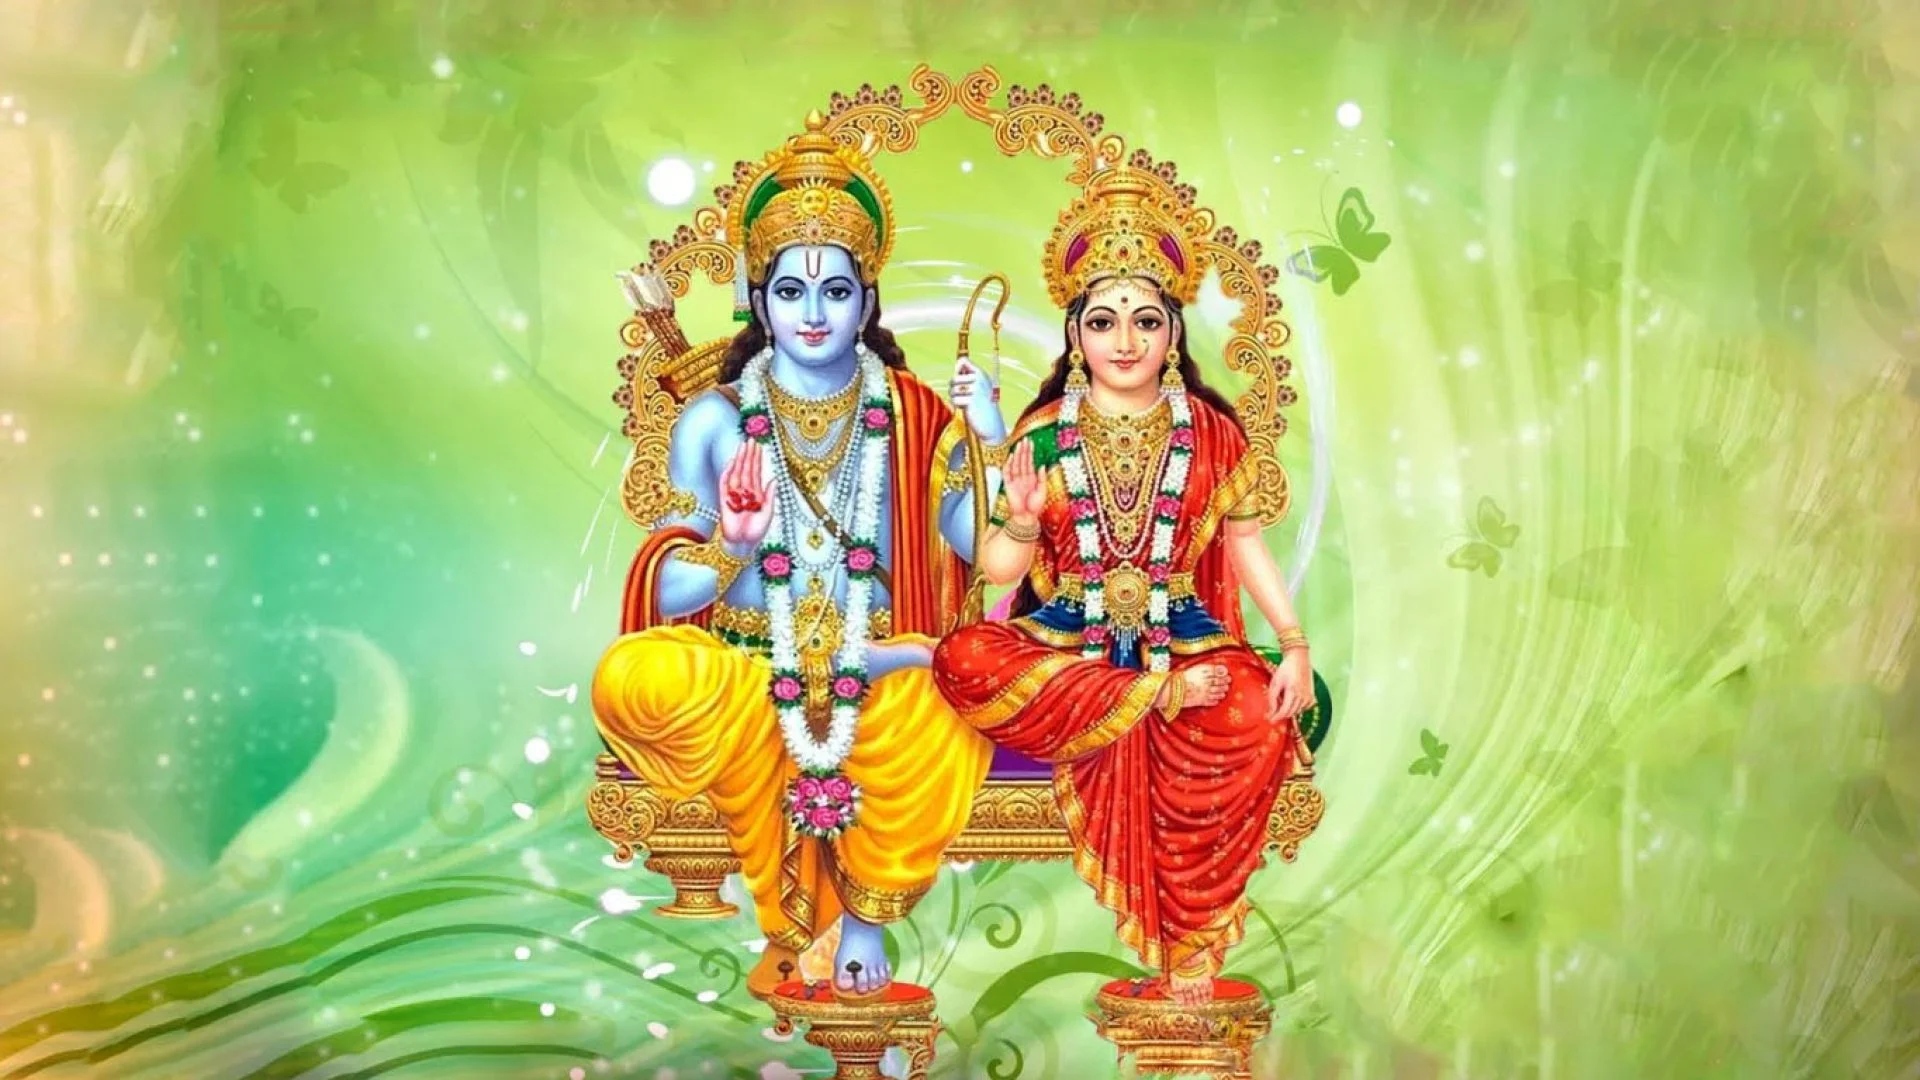 Shree Ram And Mata Sita Sitting On Thrones